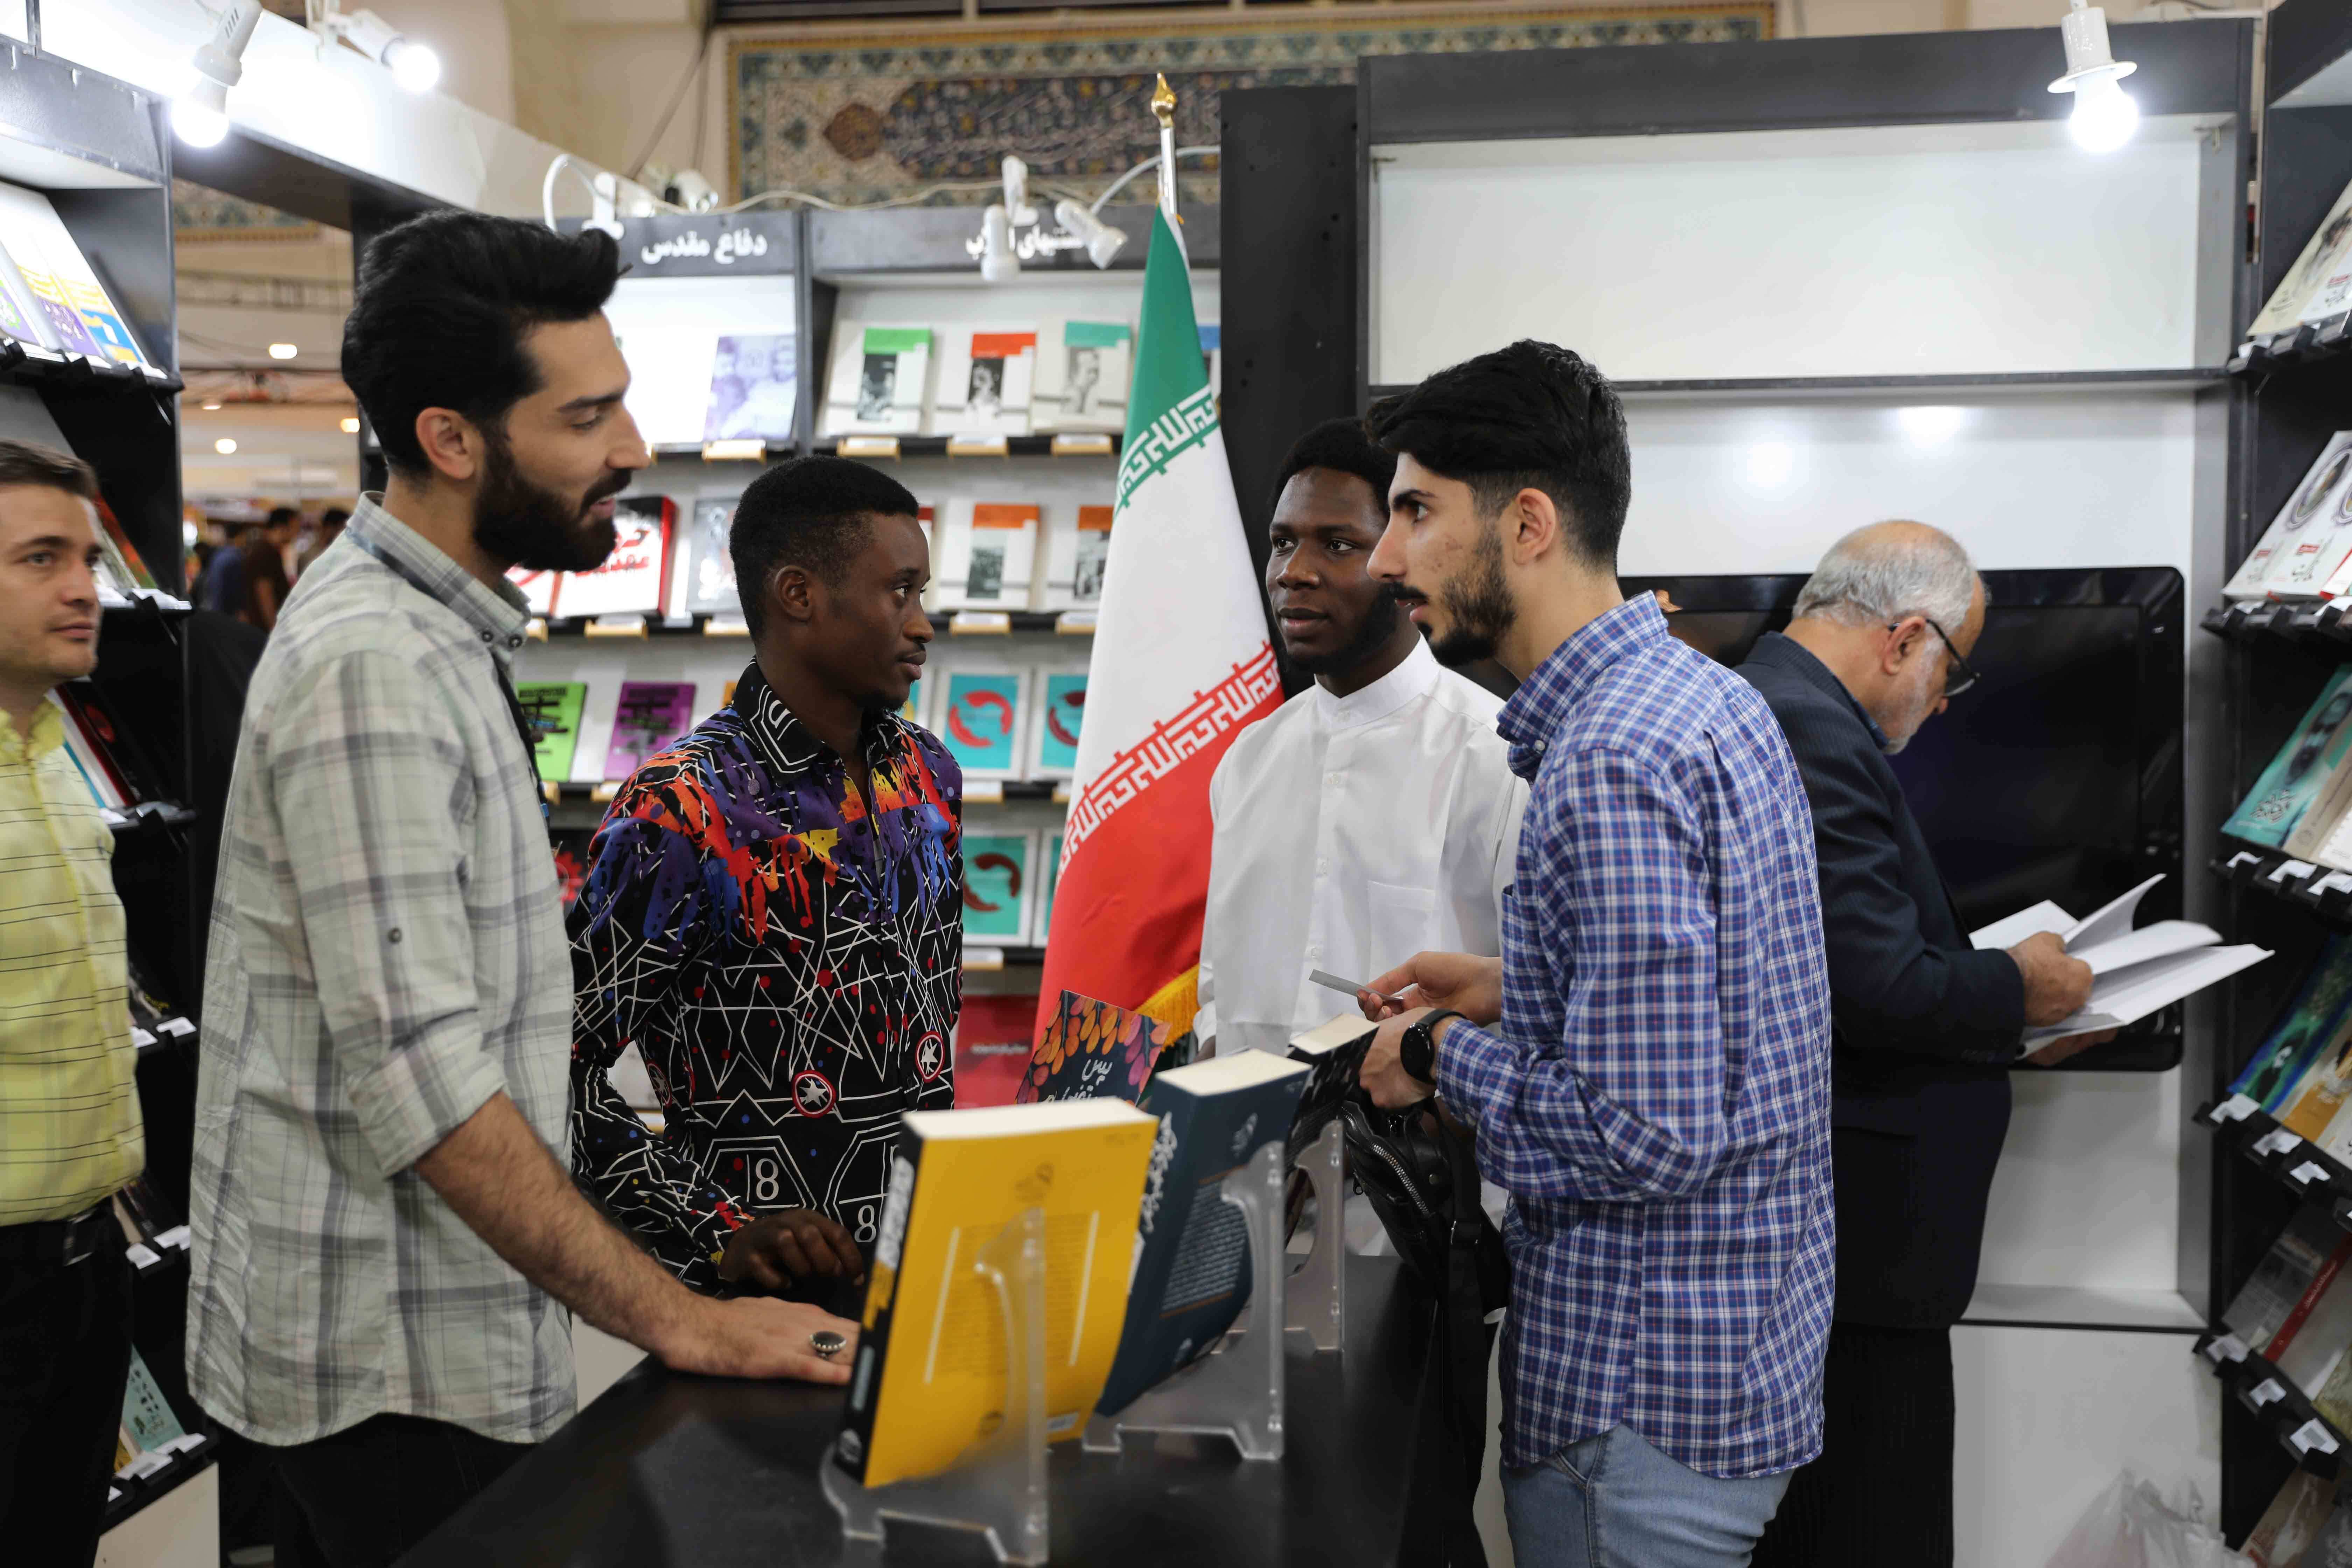 غرفه مرکز اسناد انقلاب اسلامی در قاب دوربین | بخش اول